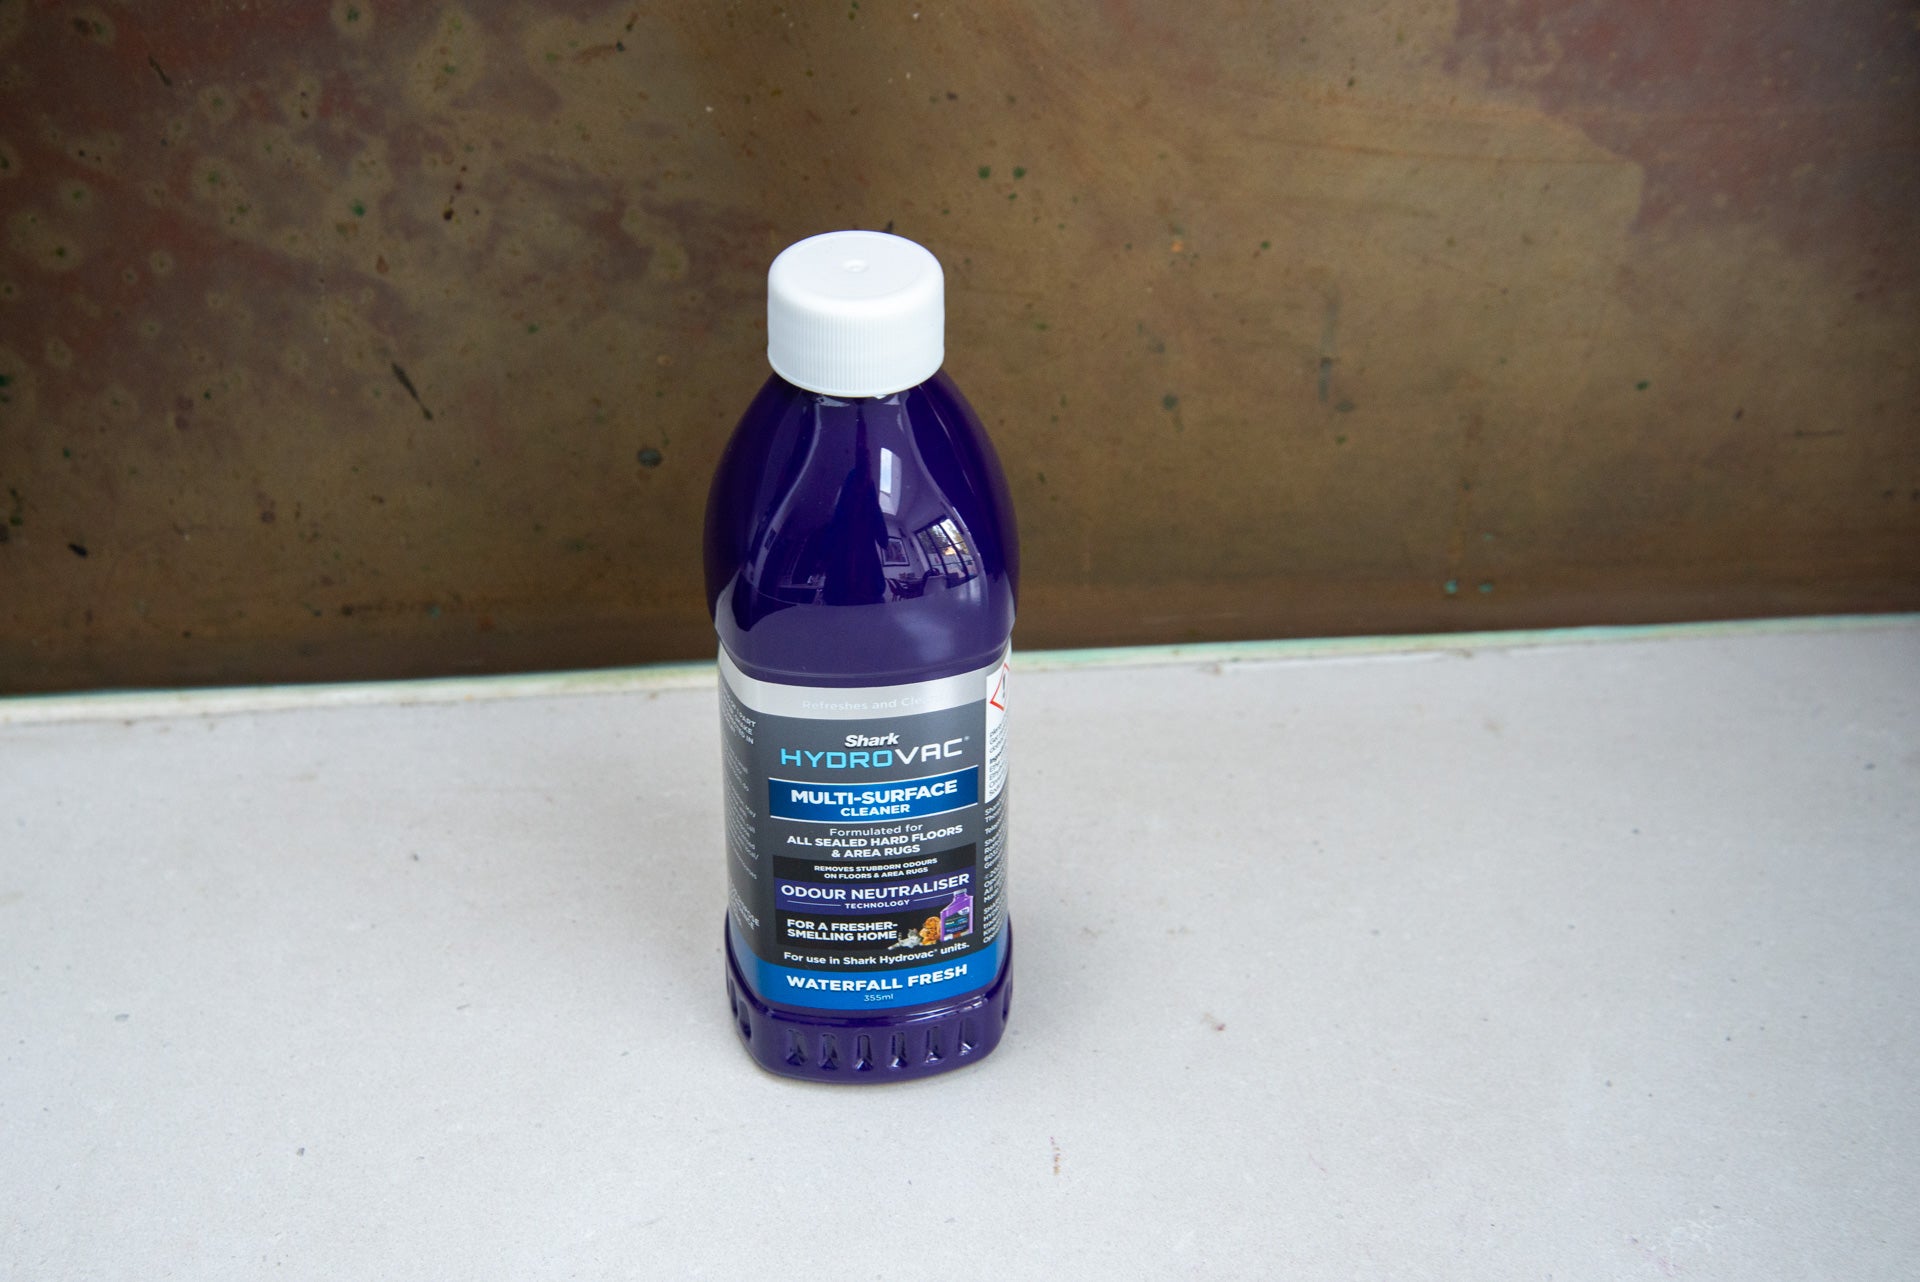 Shark HydroVac Cordless Hard Floor Cleaner WD210UK detergent